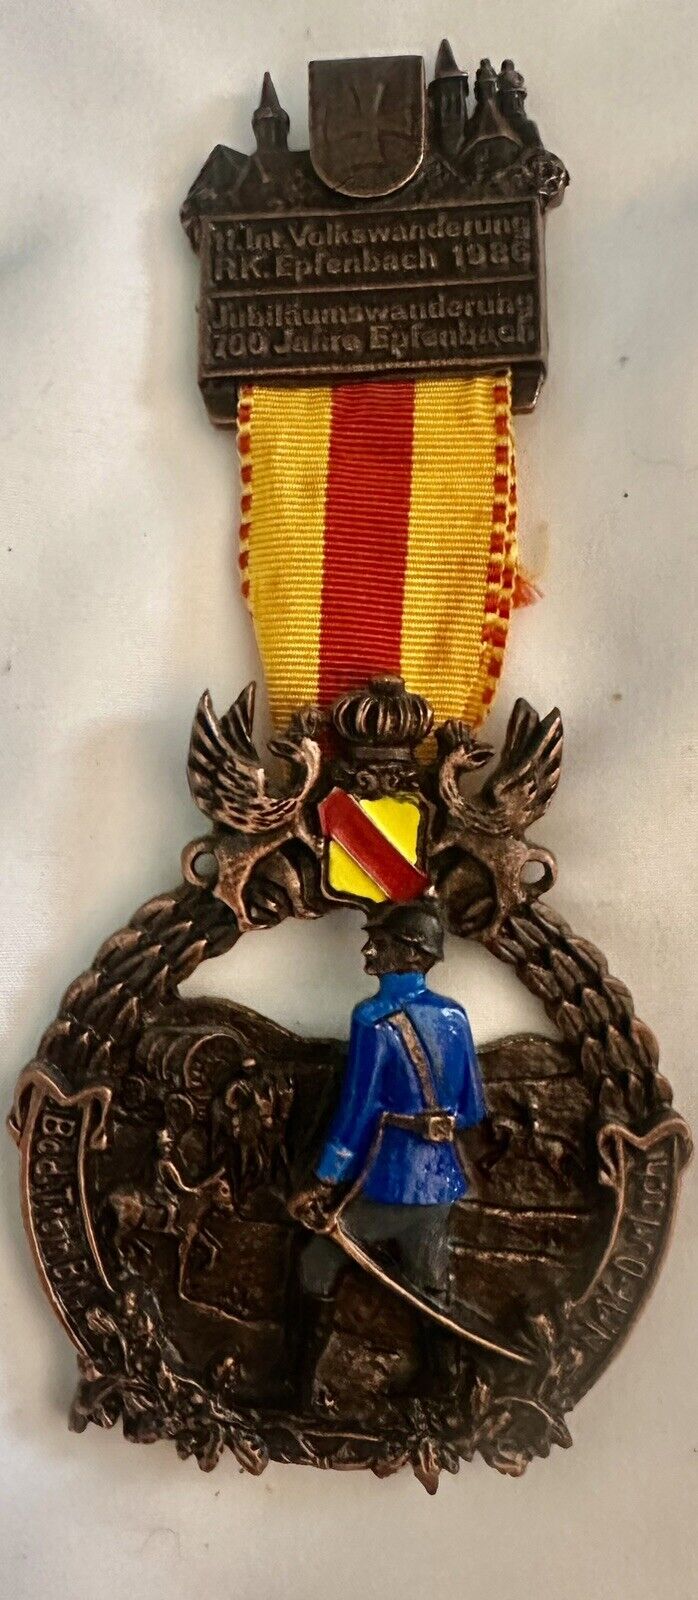 Vintage German Volkswanderung Medal Epfenbach 1986 Sword Soldier Durlach